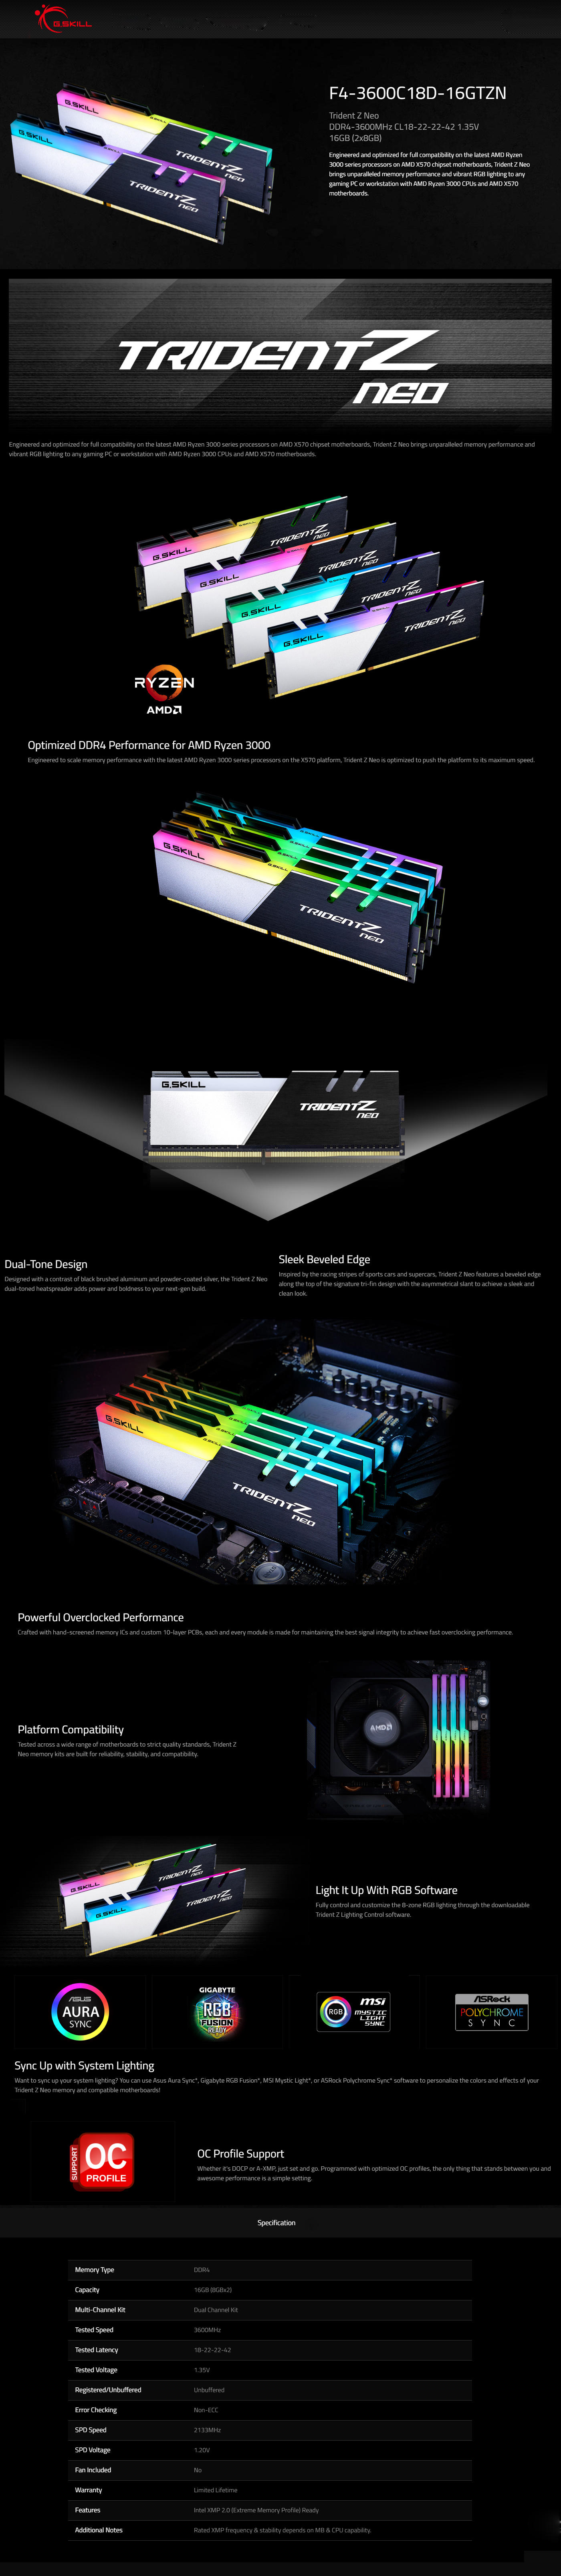 Buy Online G.skill Trident Z Neo 16GB (2 x 8GB) DDR4 3600MHz Desktop RAM (F4-3600C18D-16GTZN)